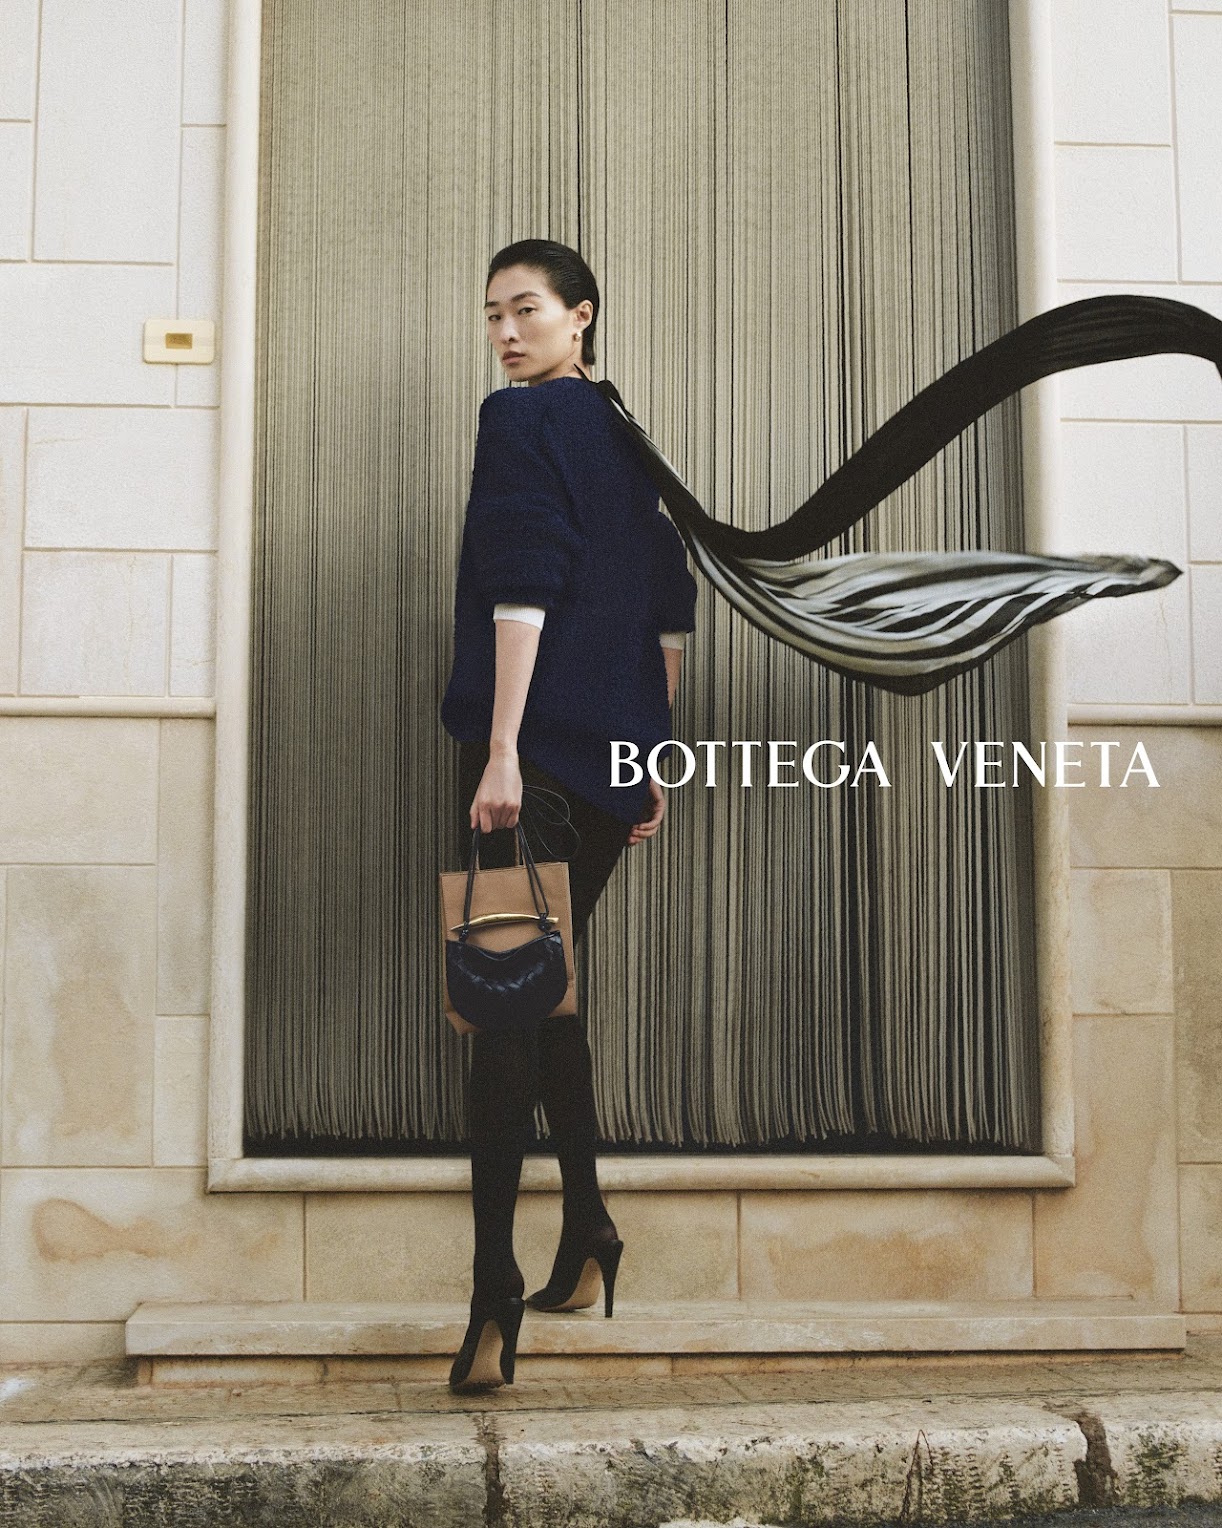 Let's meet the #bottegaveneta Andiamo